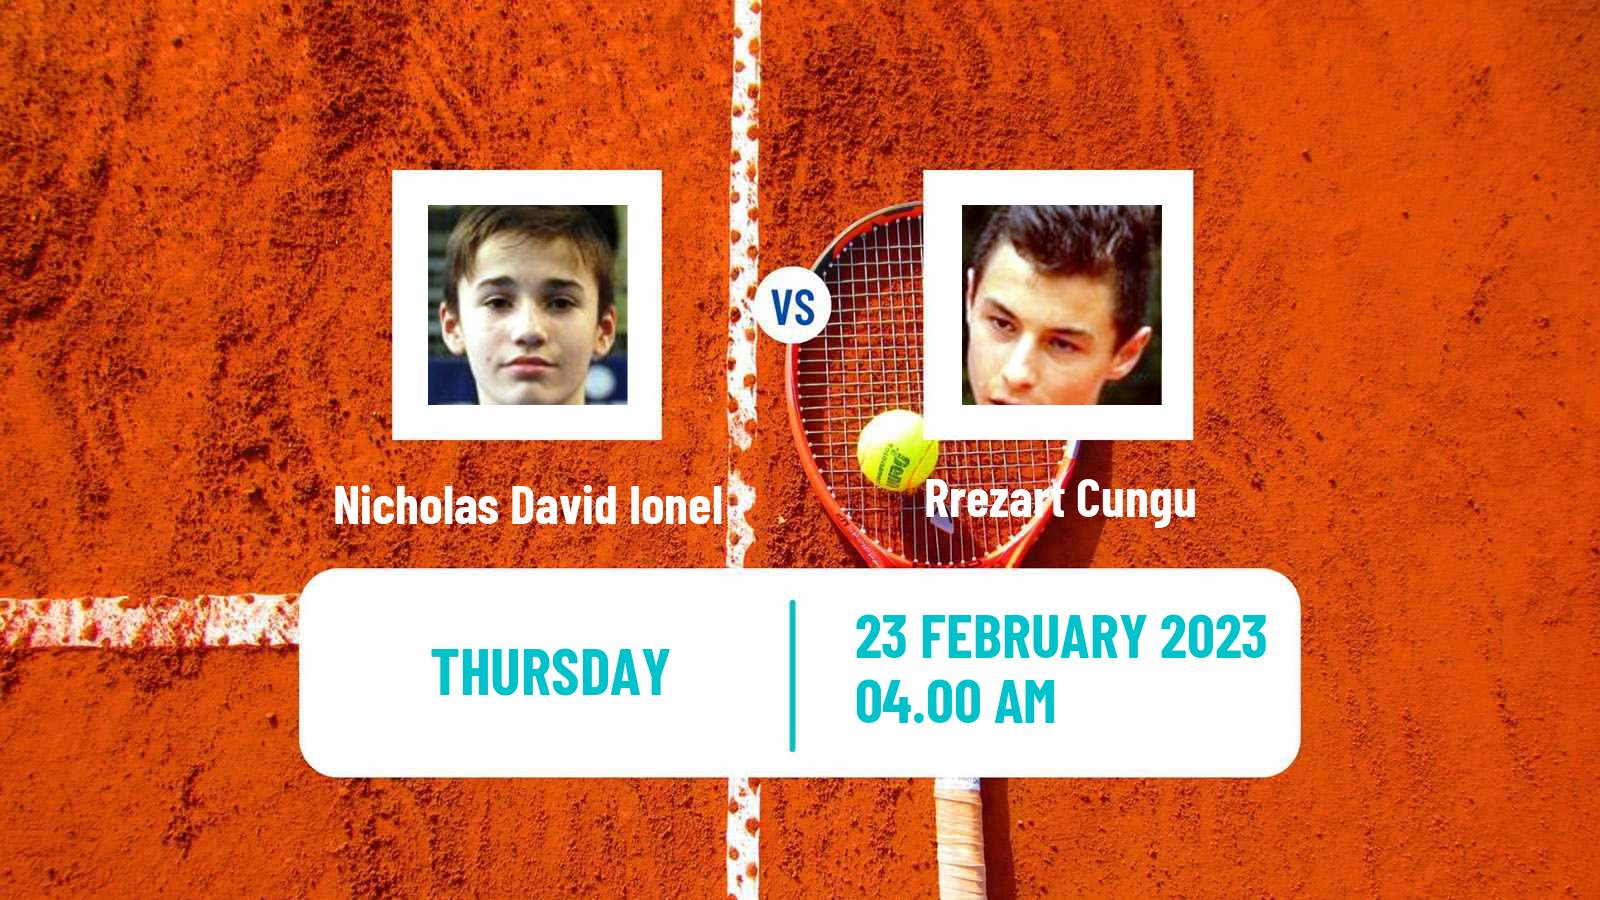 Tennis ITF Tournaments Nicholas David Ionel - Rrezart Cungu